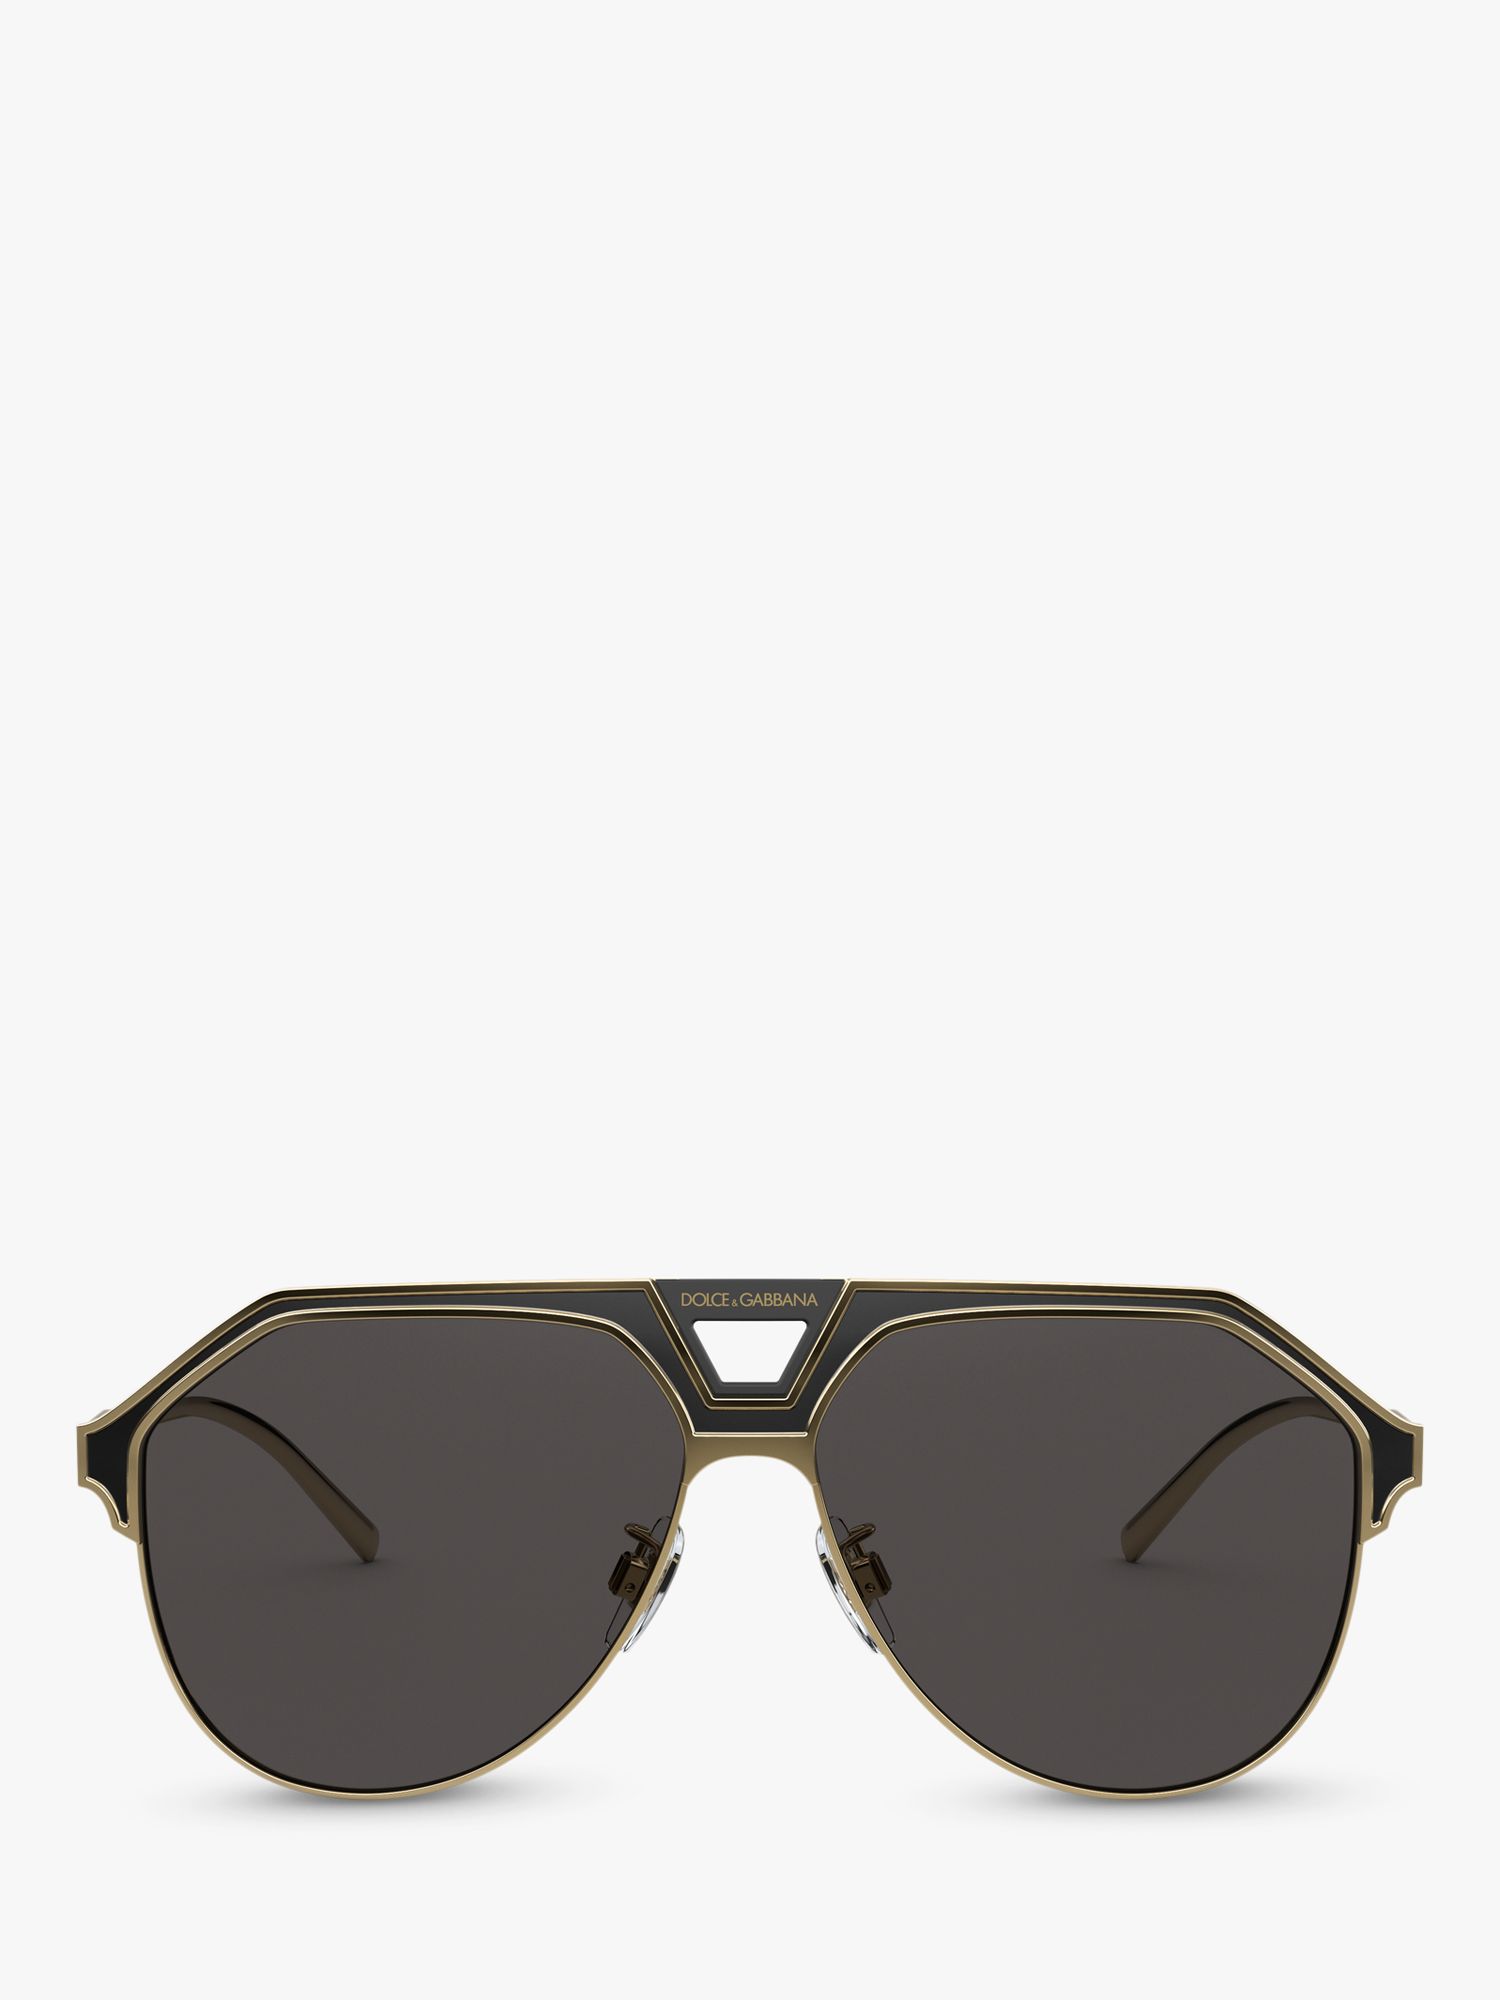 Dolce & Gabbana DG2257 Men's Aviator Sunglasses, Black at John Lewis ...